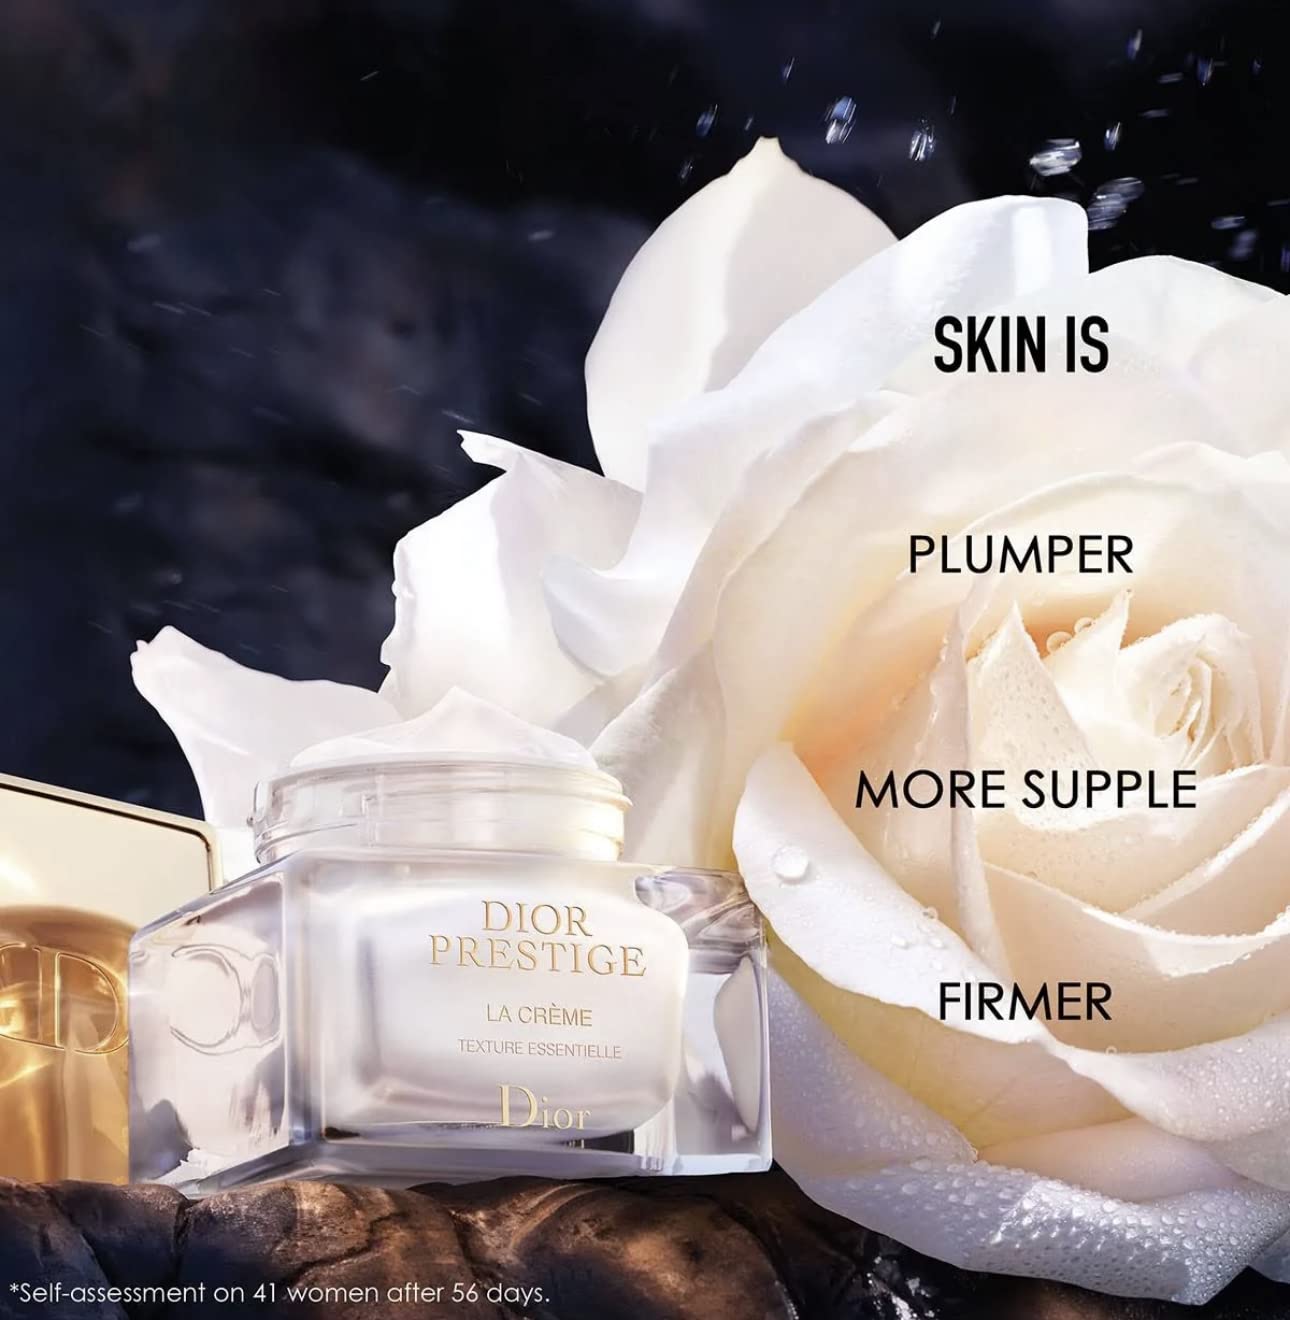 Dior Prestige La Creme Texture Essentielle Moisturizing Face Cream Moisturizer .5oz / 15mL